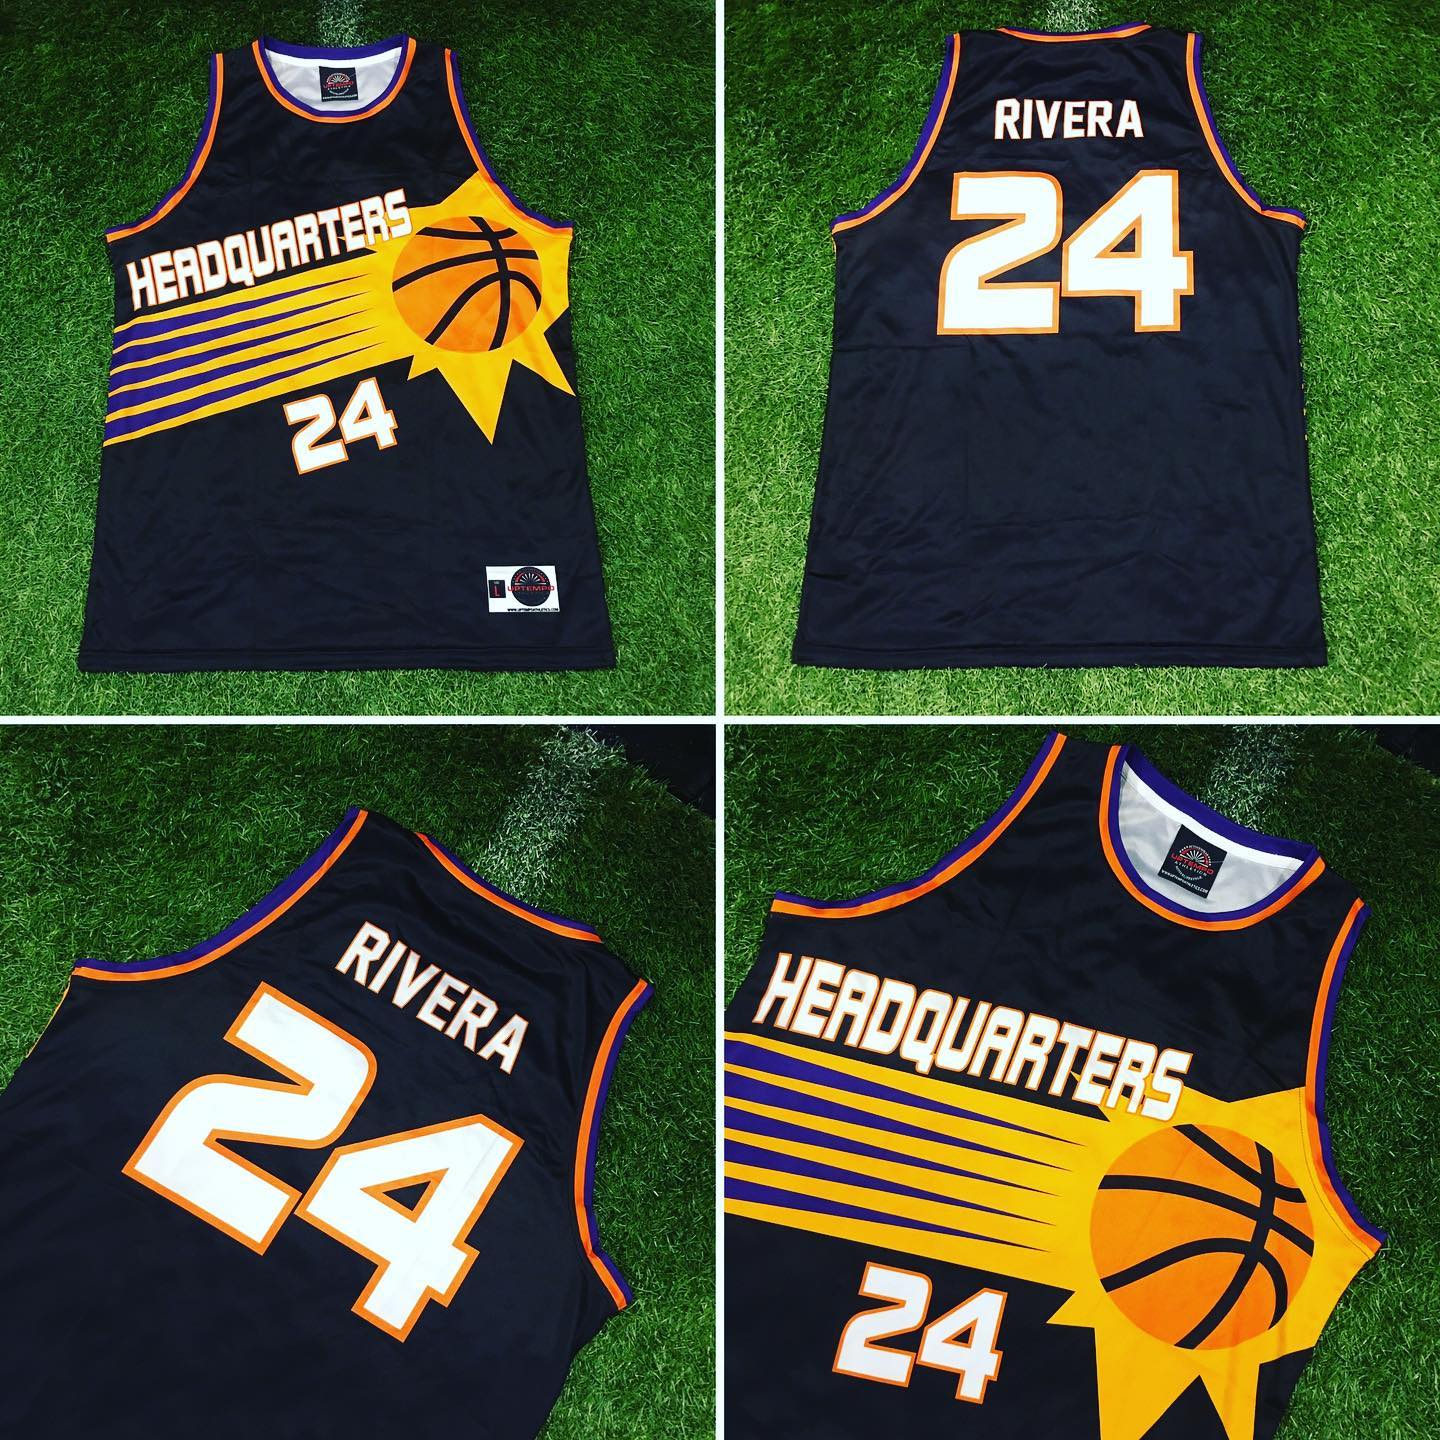 We have custom Phoenix Suns jerseys - Basketball Forever